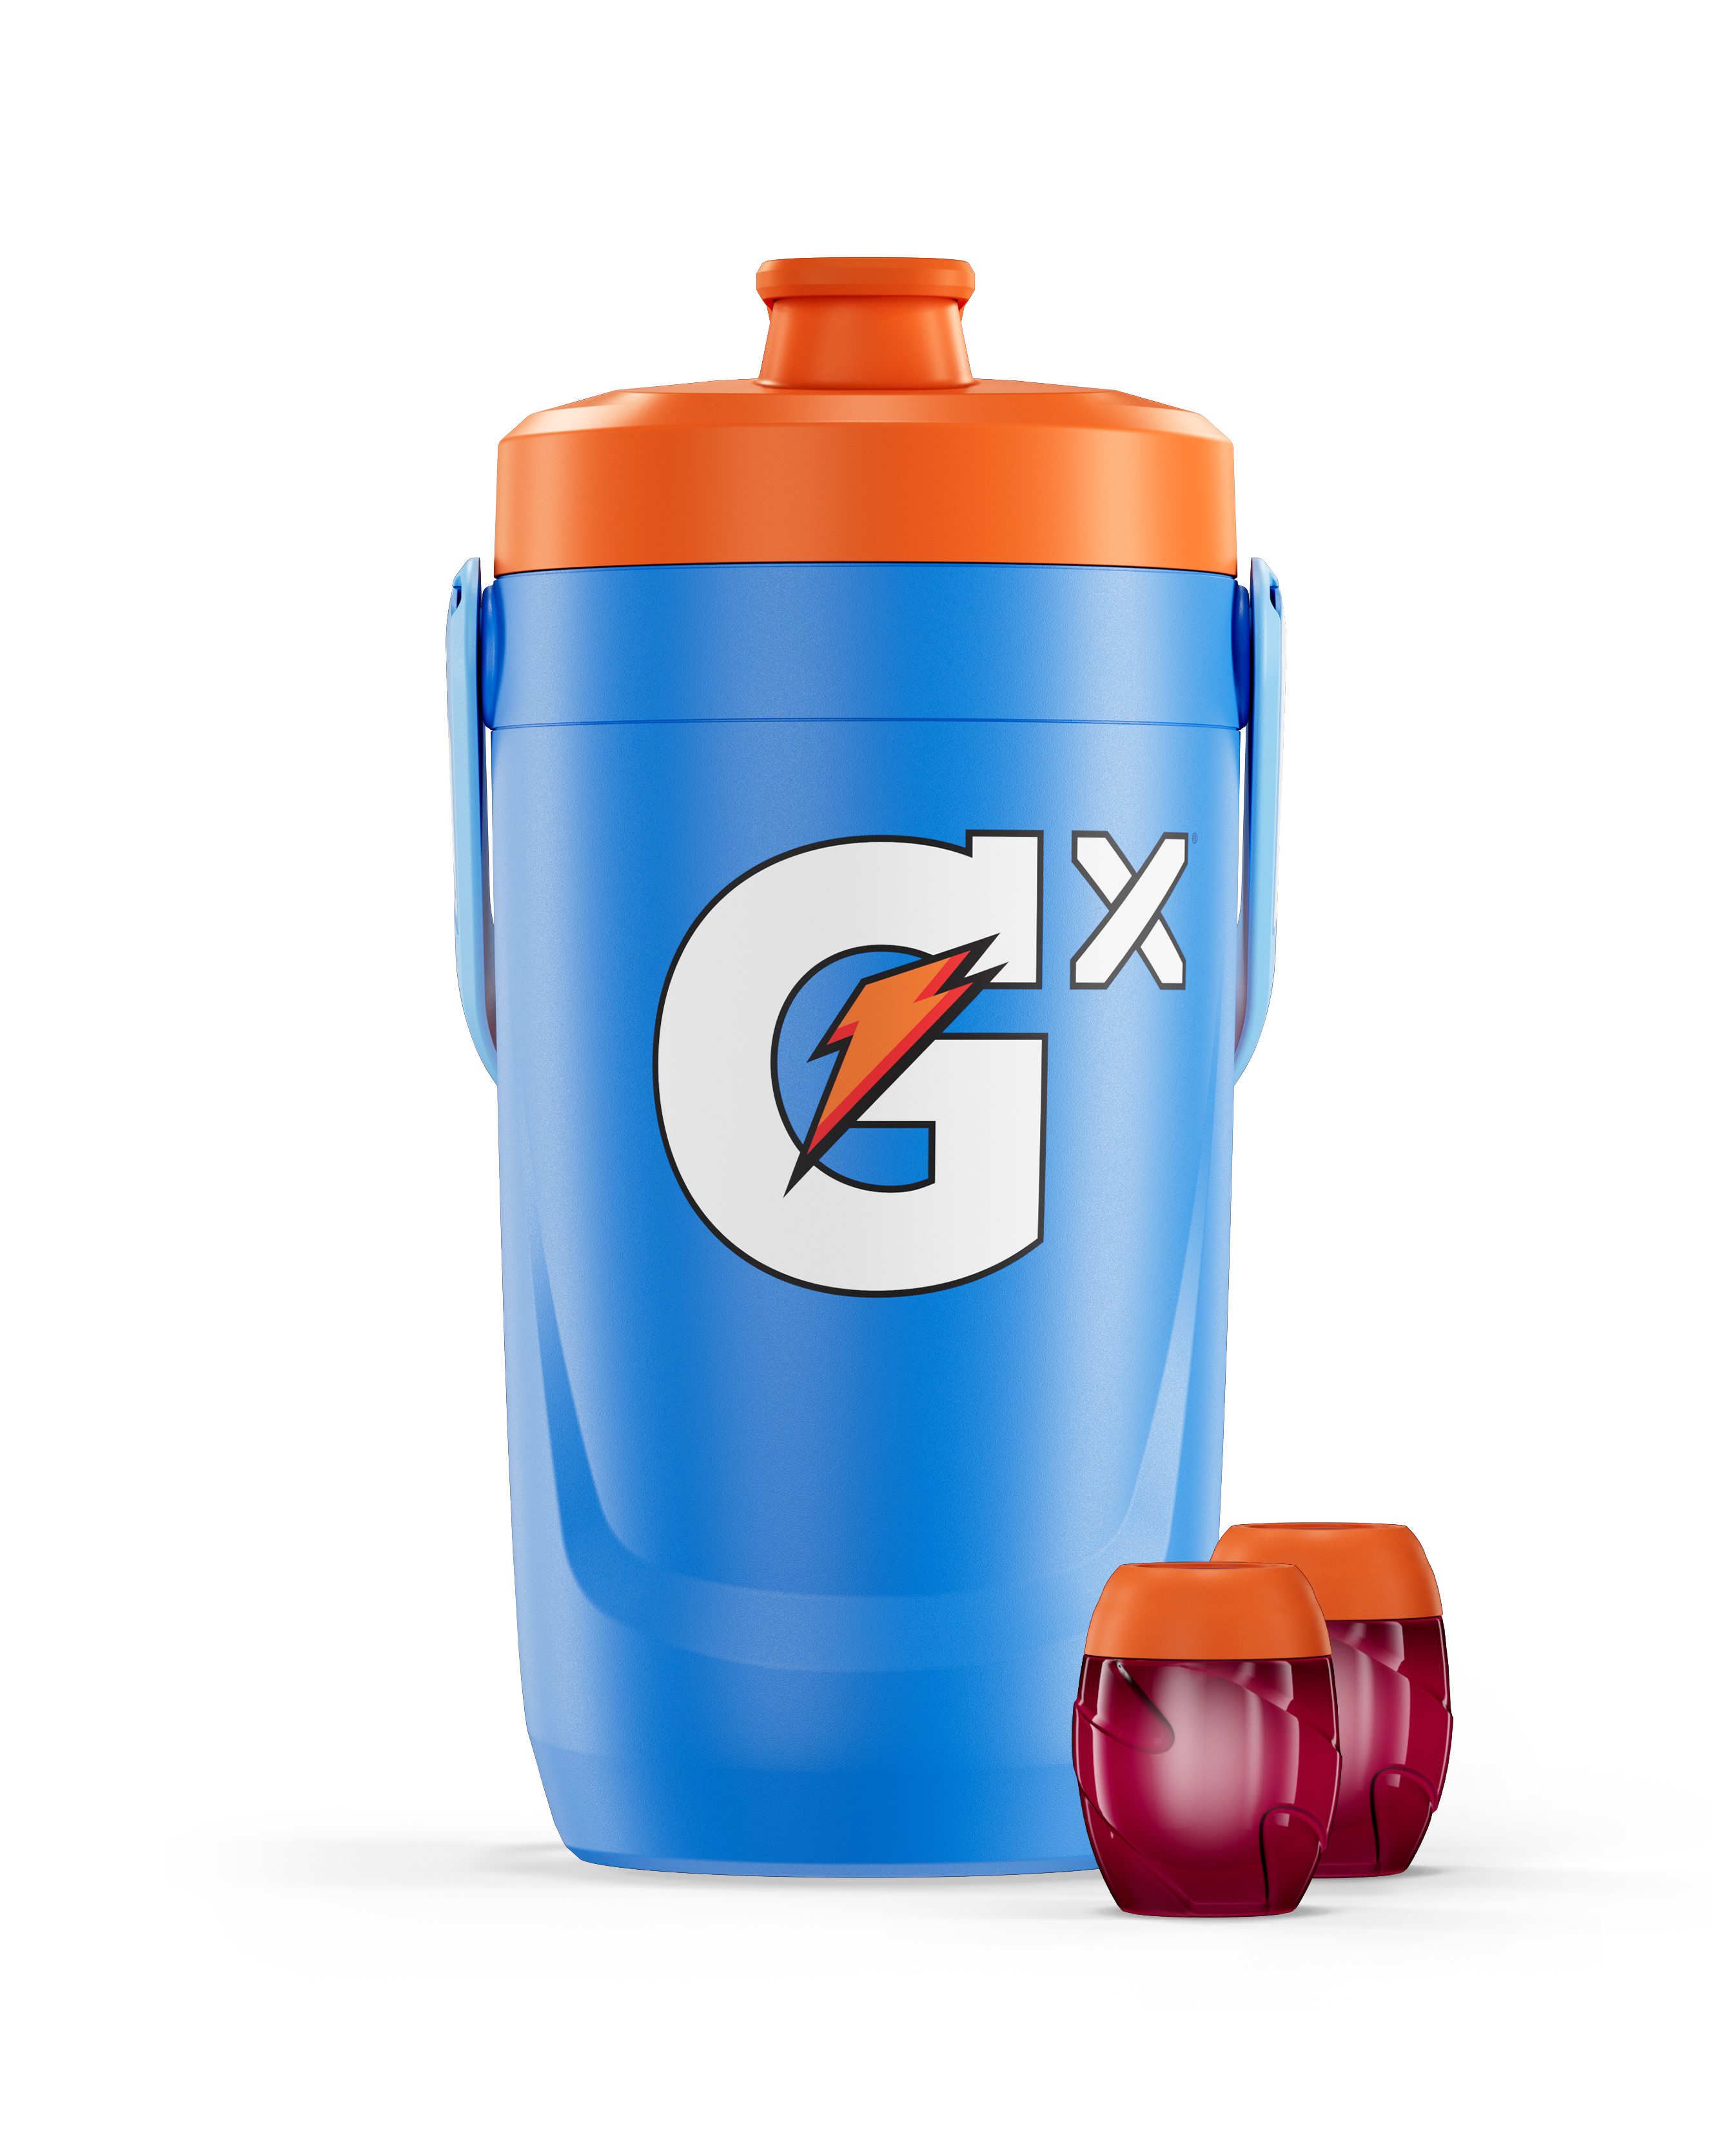 Gx Jug Cobalt with Gx Pods Fruit Punch